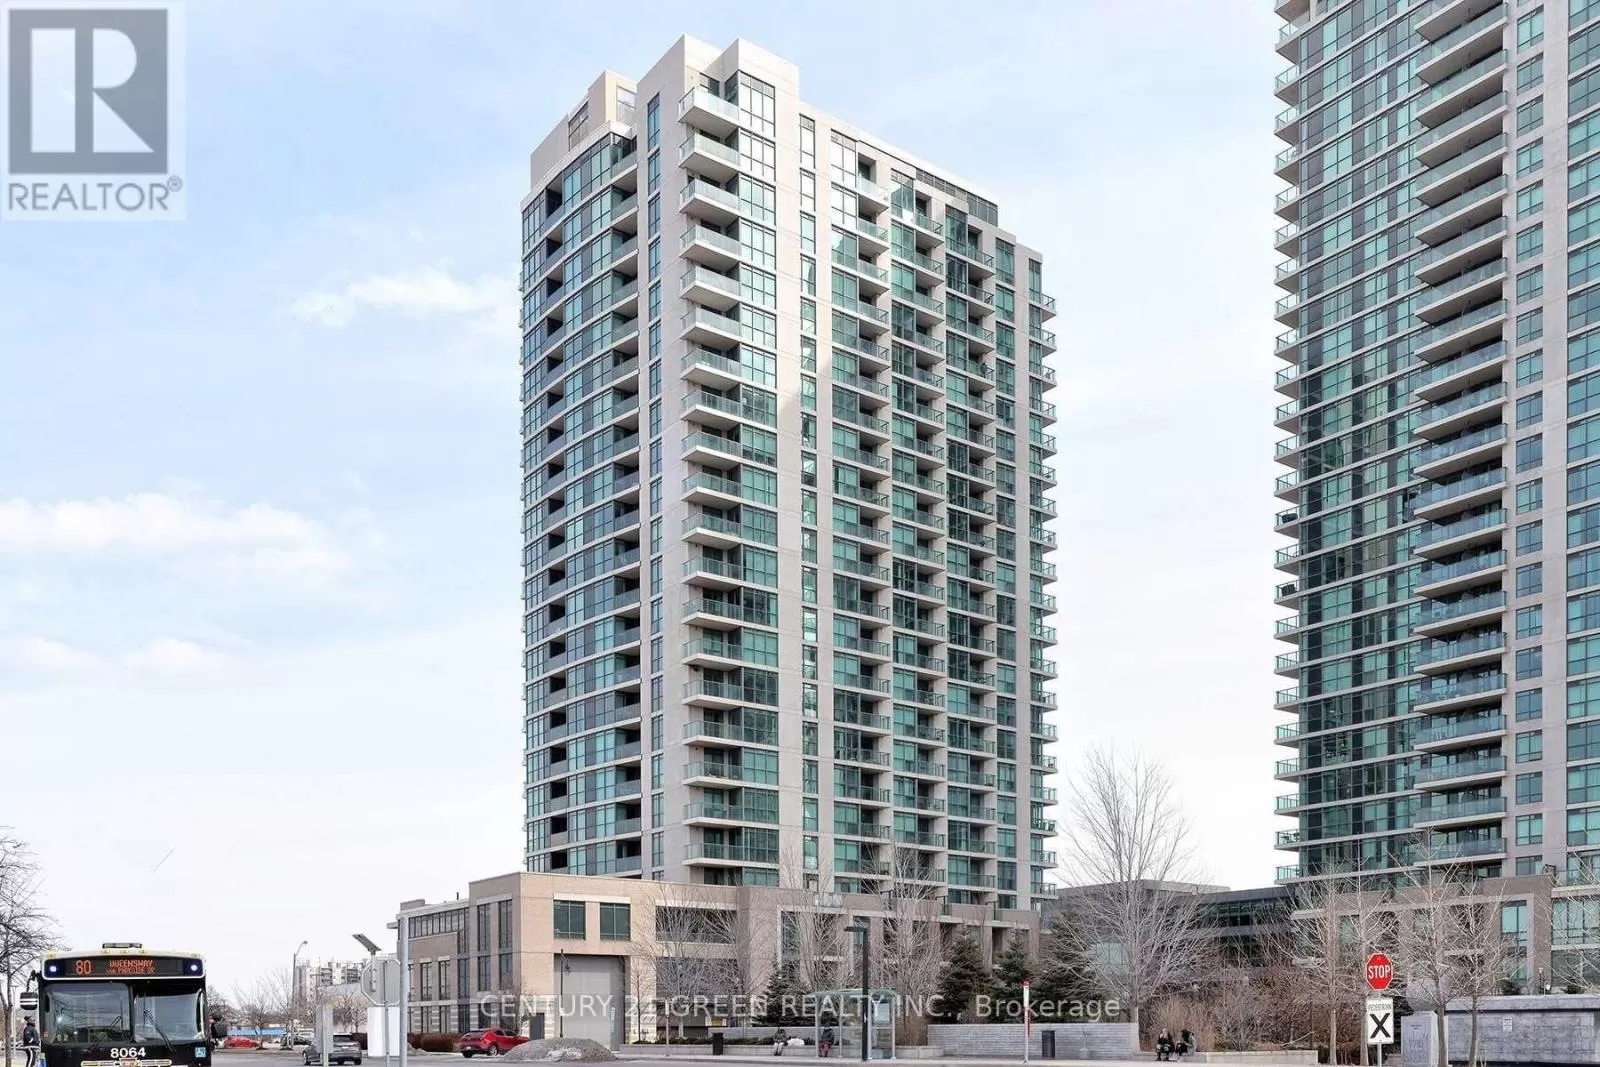 Apartment for rent: 809 - 205 Sherway Gardens Road, Toronto, Ontario M9C 0A5